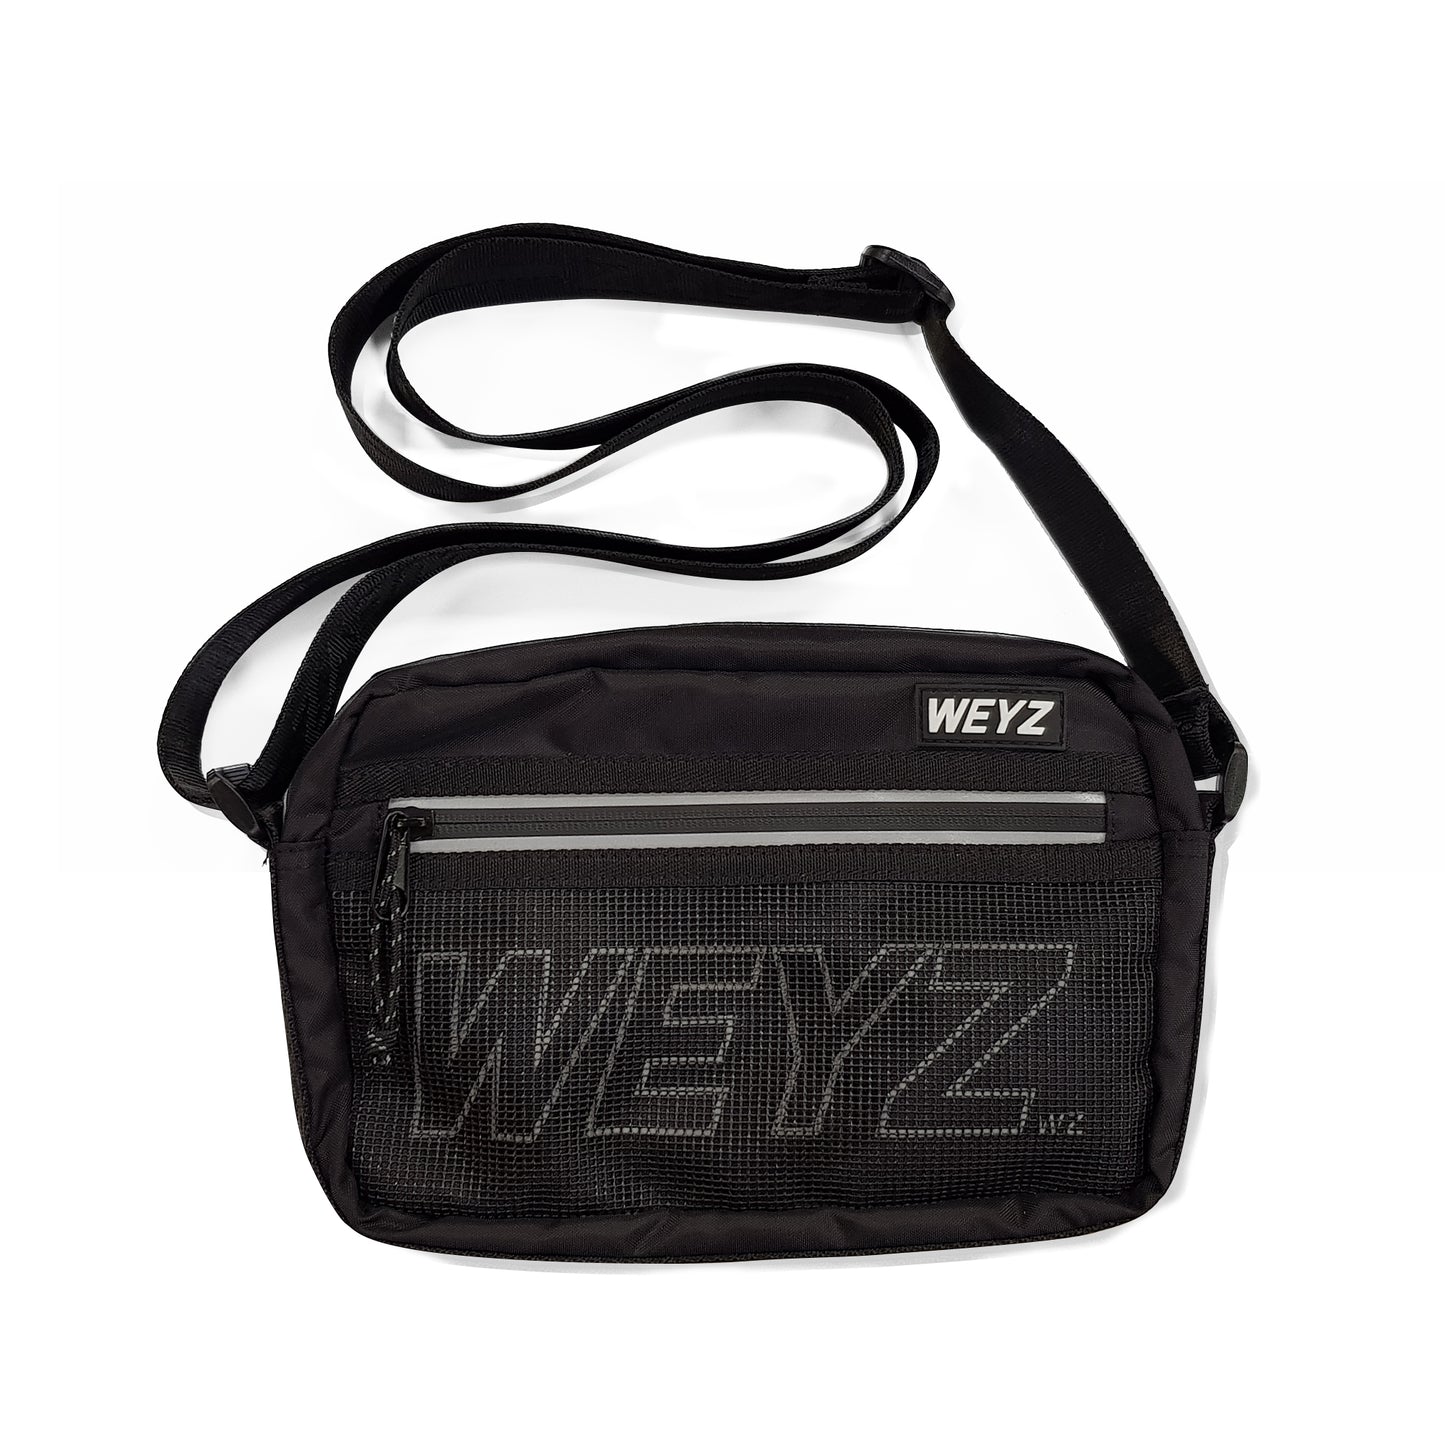 shoulder bag weyz black 100% woven polyester rubber patch adjustable size reflective zip